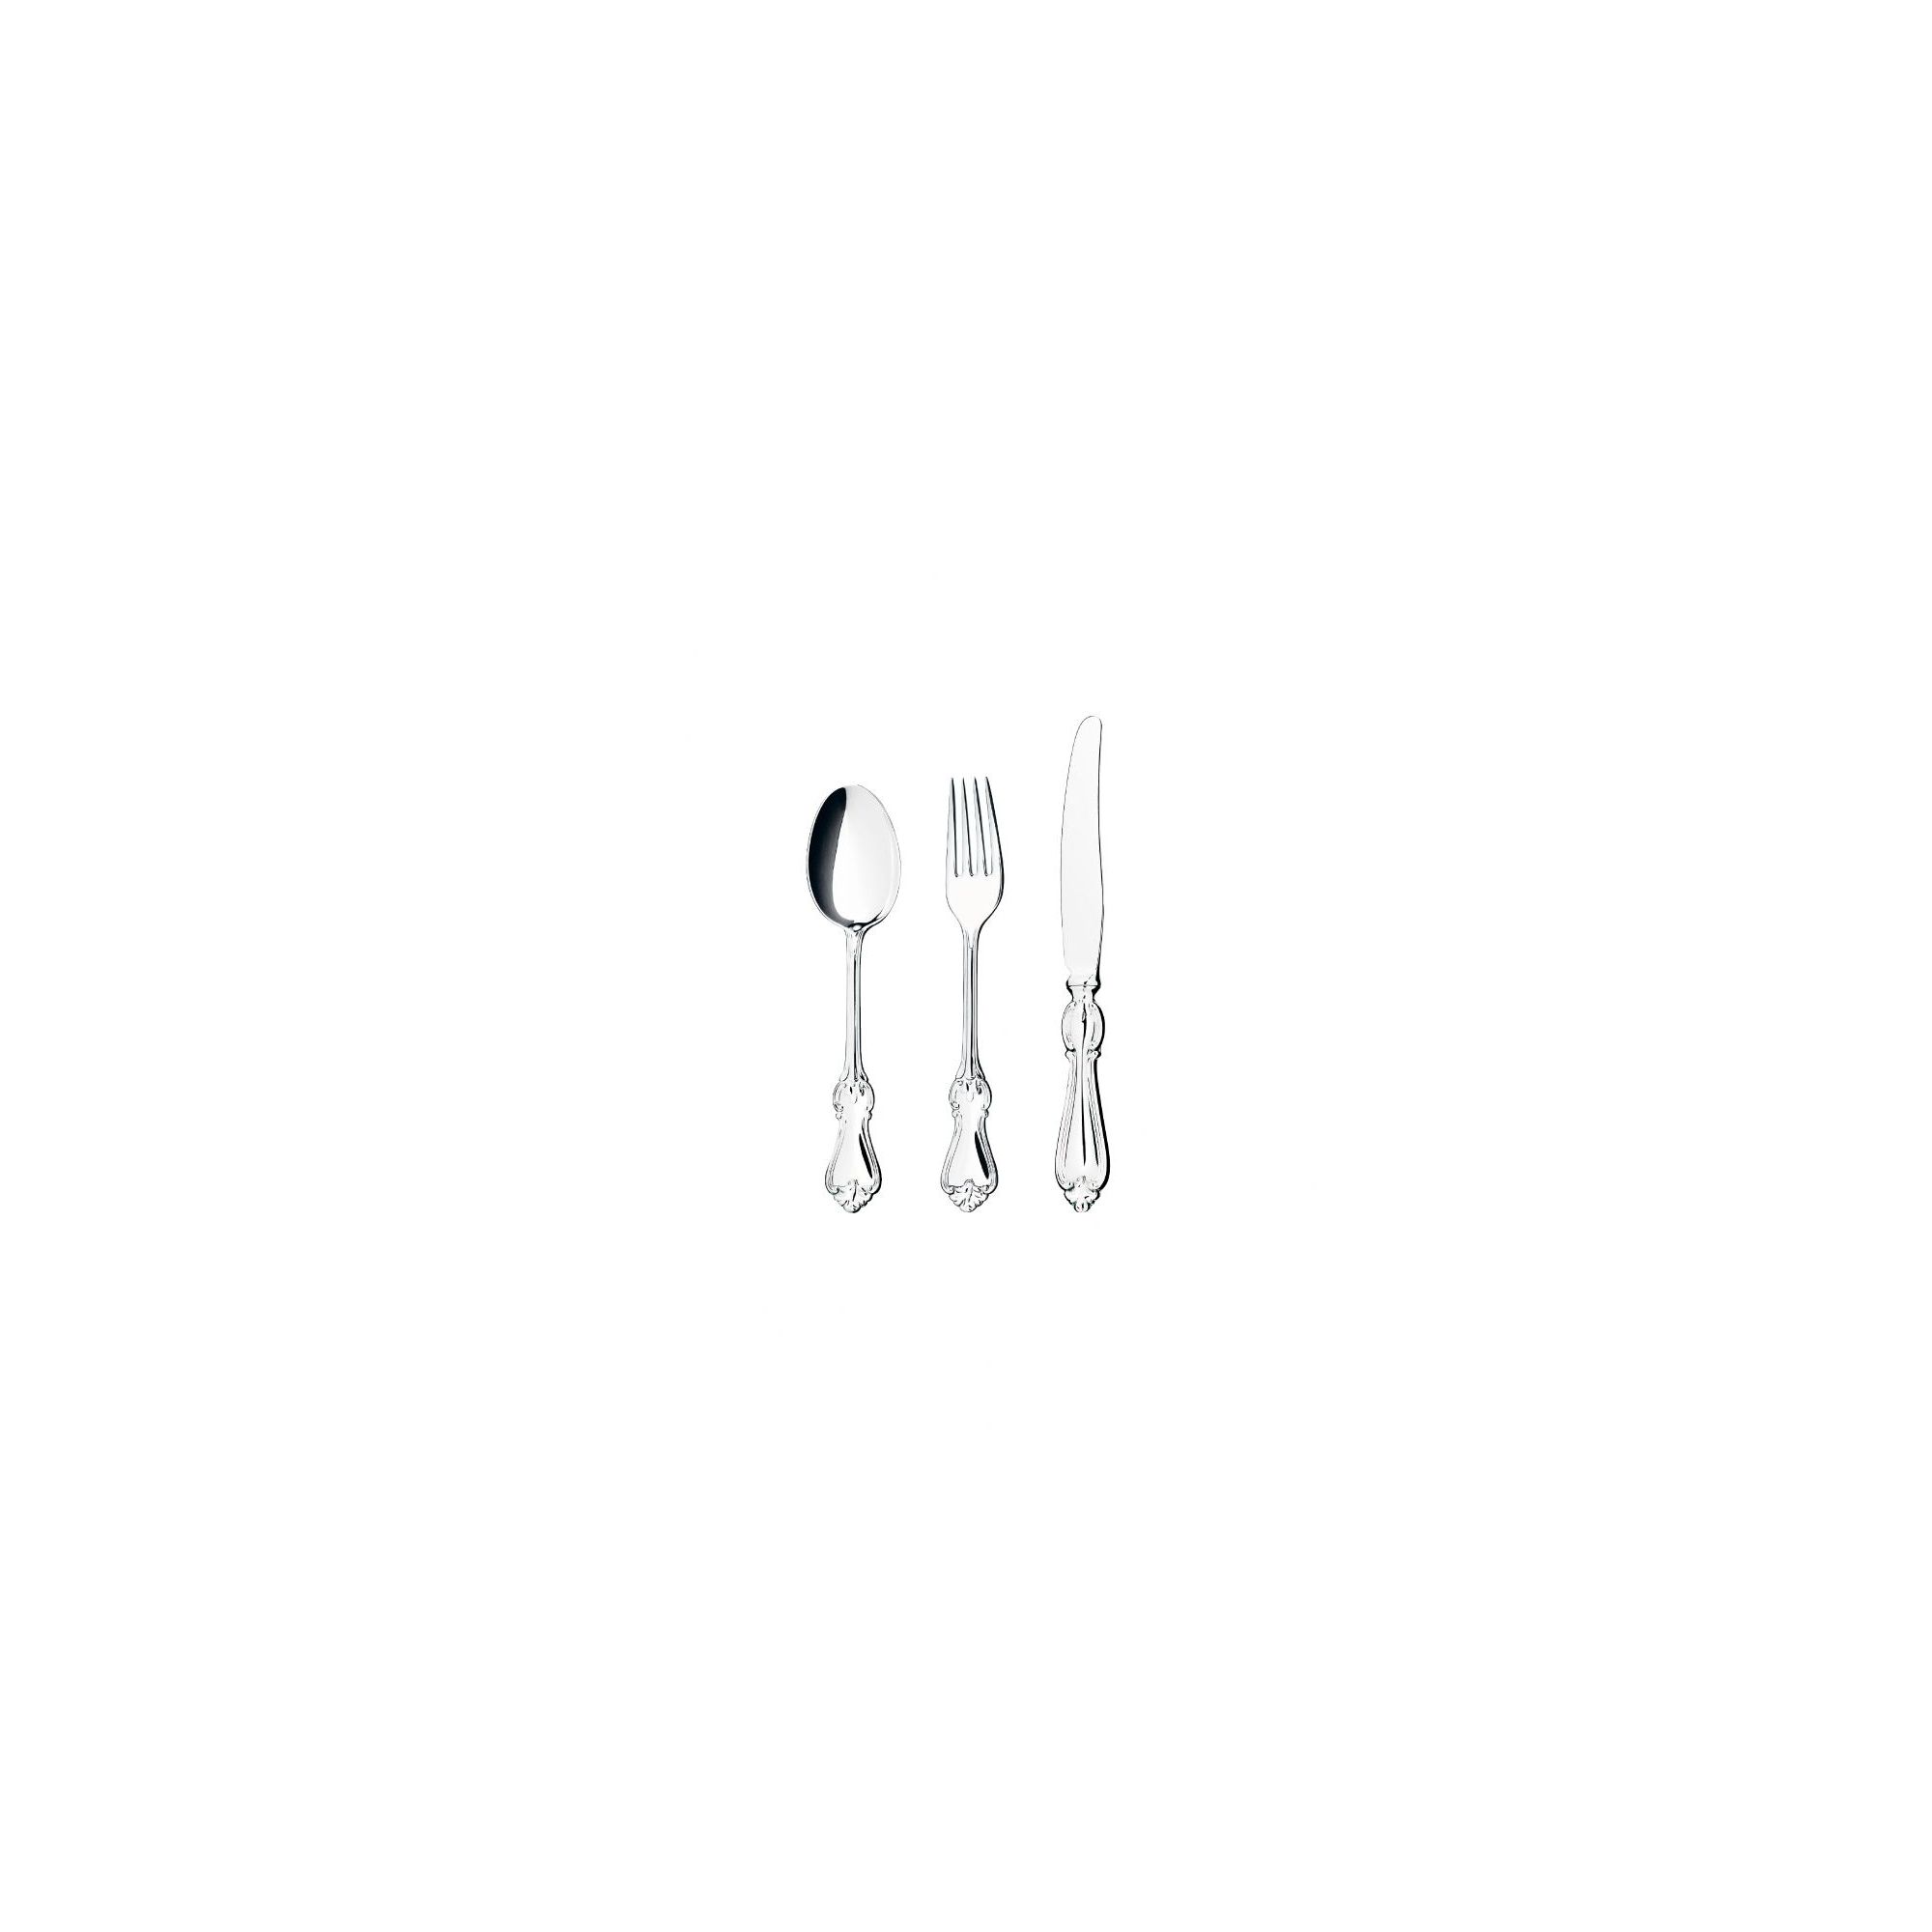 Mema/GAB Olga 12 Piece Silver Plated Cutlery Set 1 at Tesco Direct